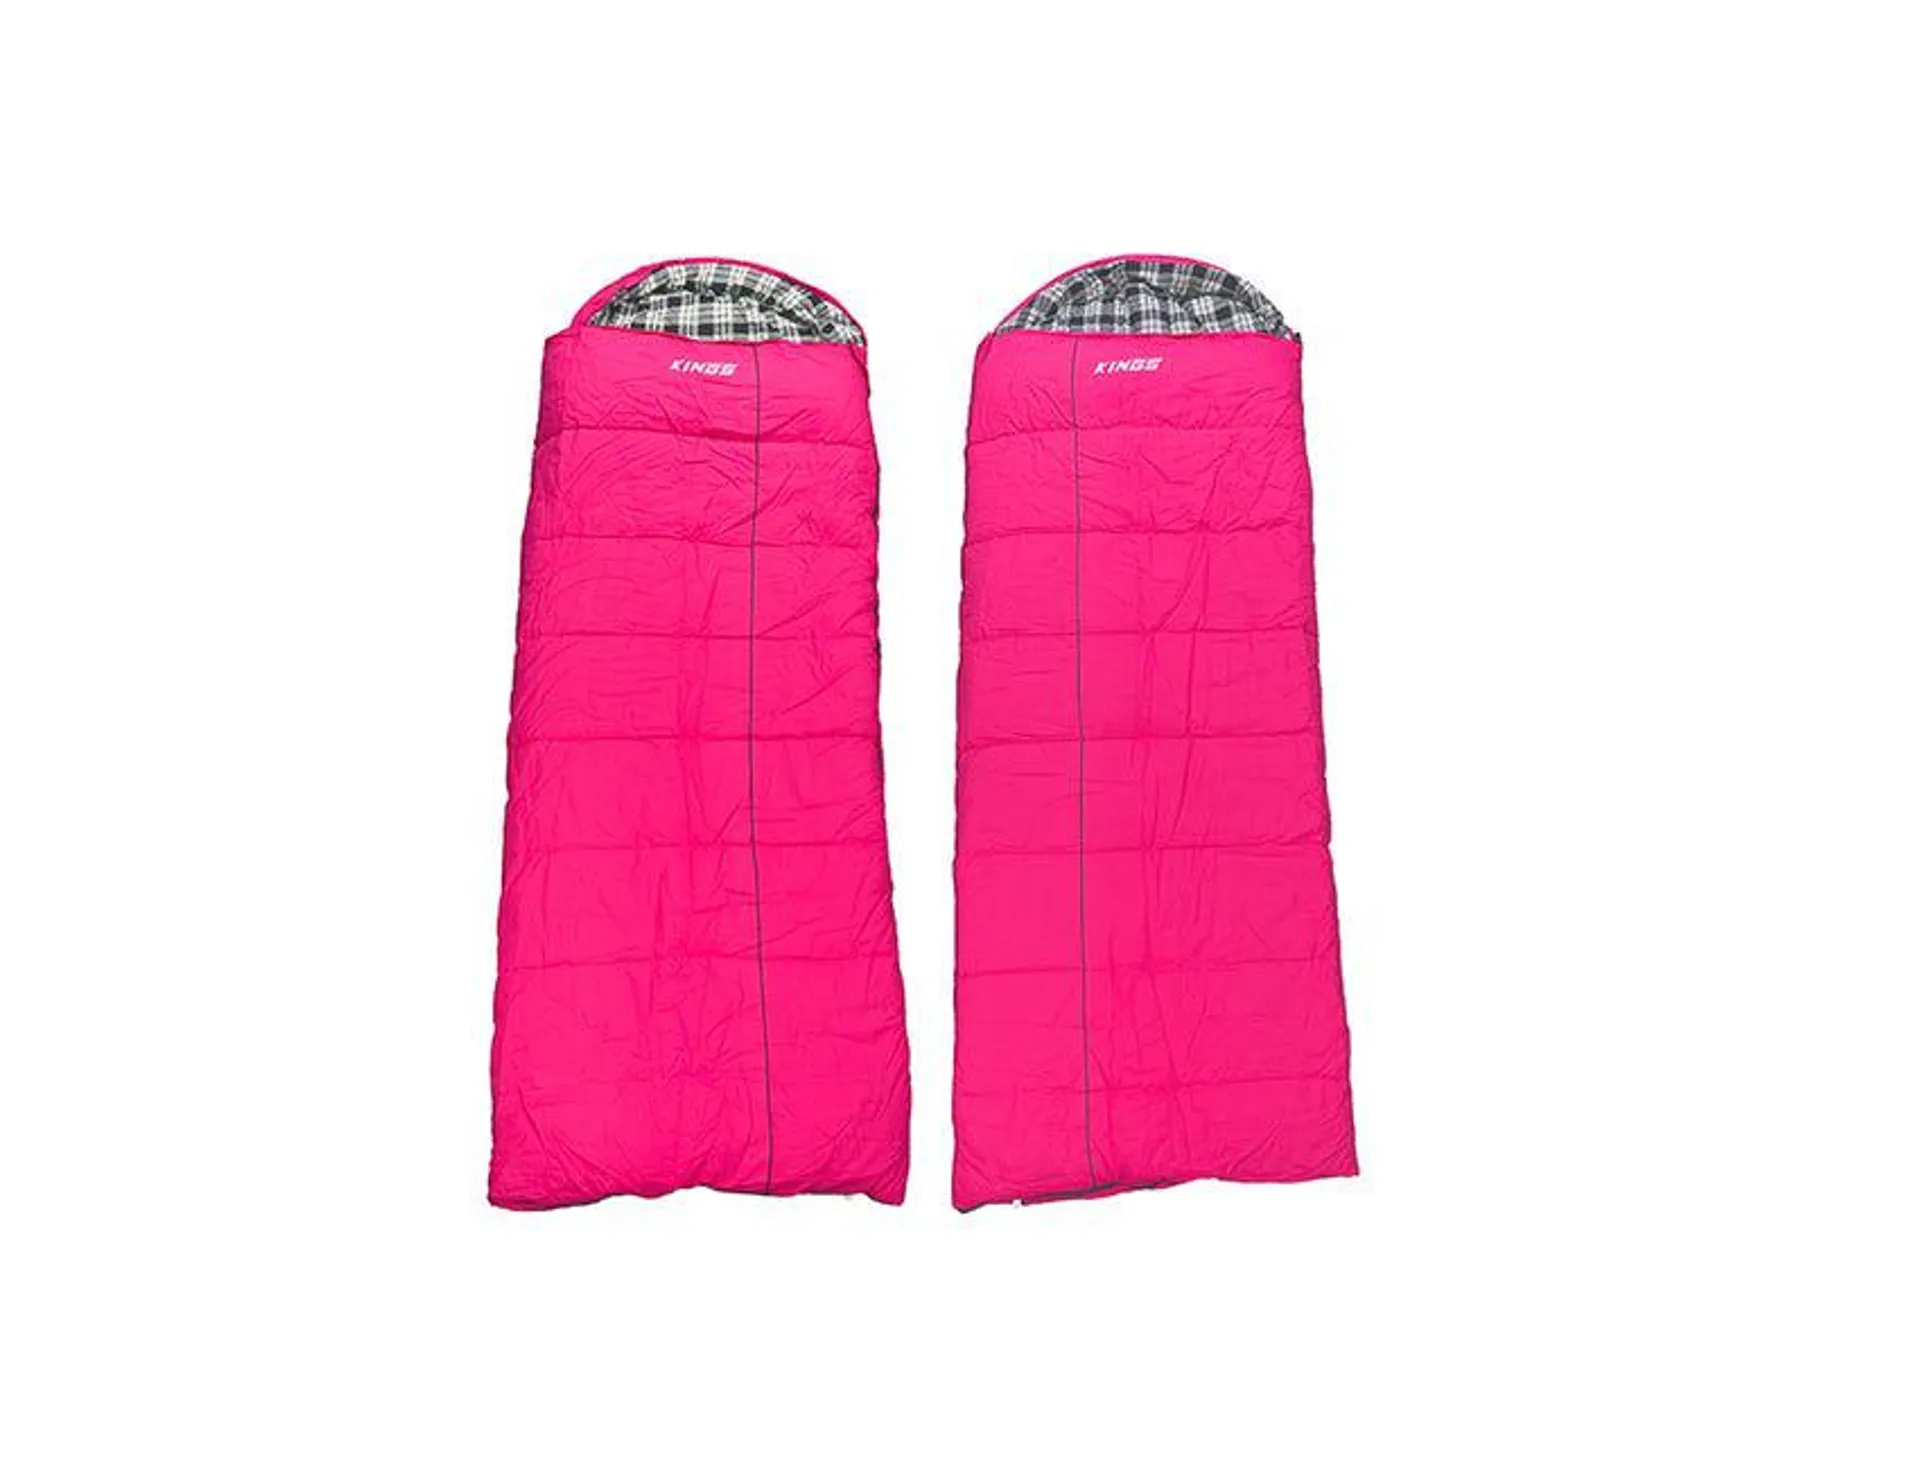 2x Adventure Kings Pink Premium Sleeping Bag - Left and Right Zipper